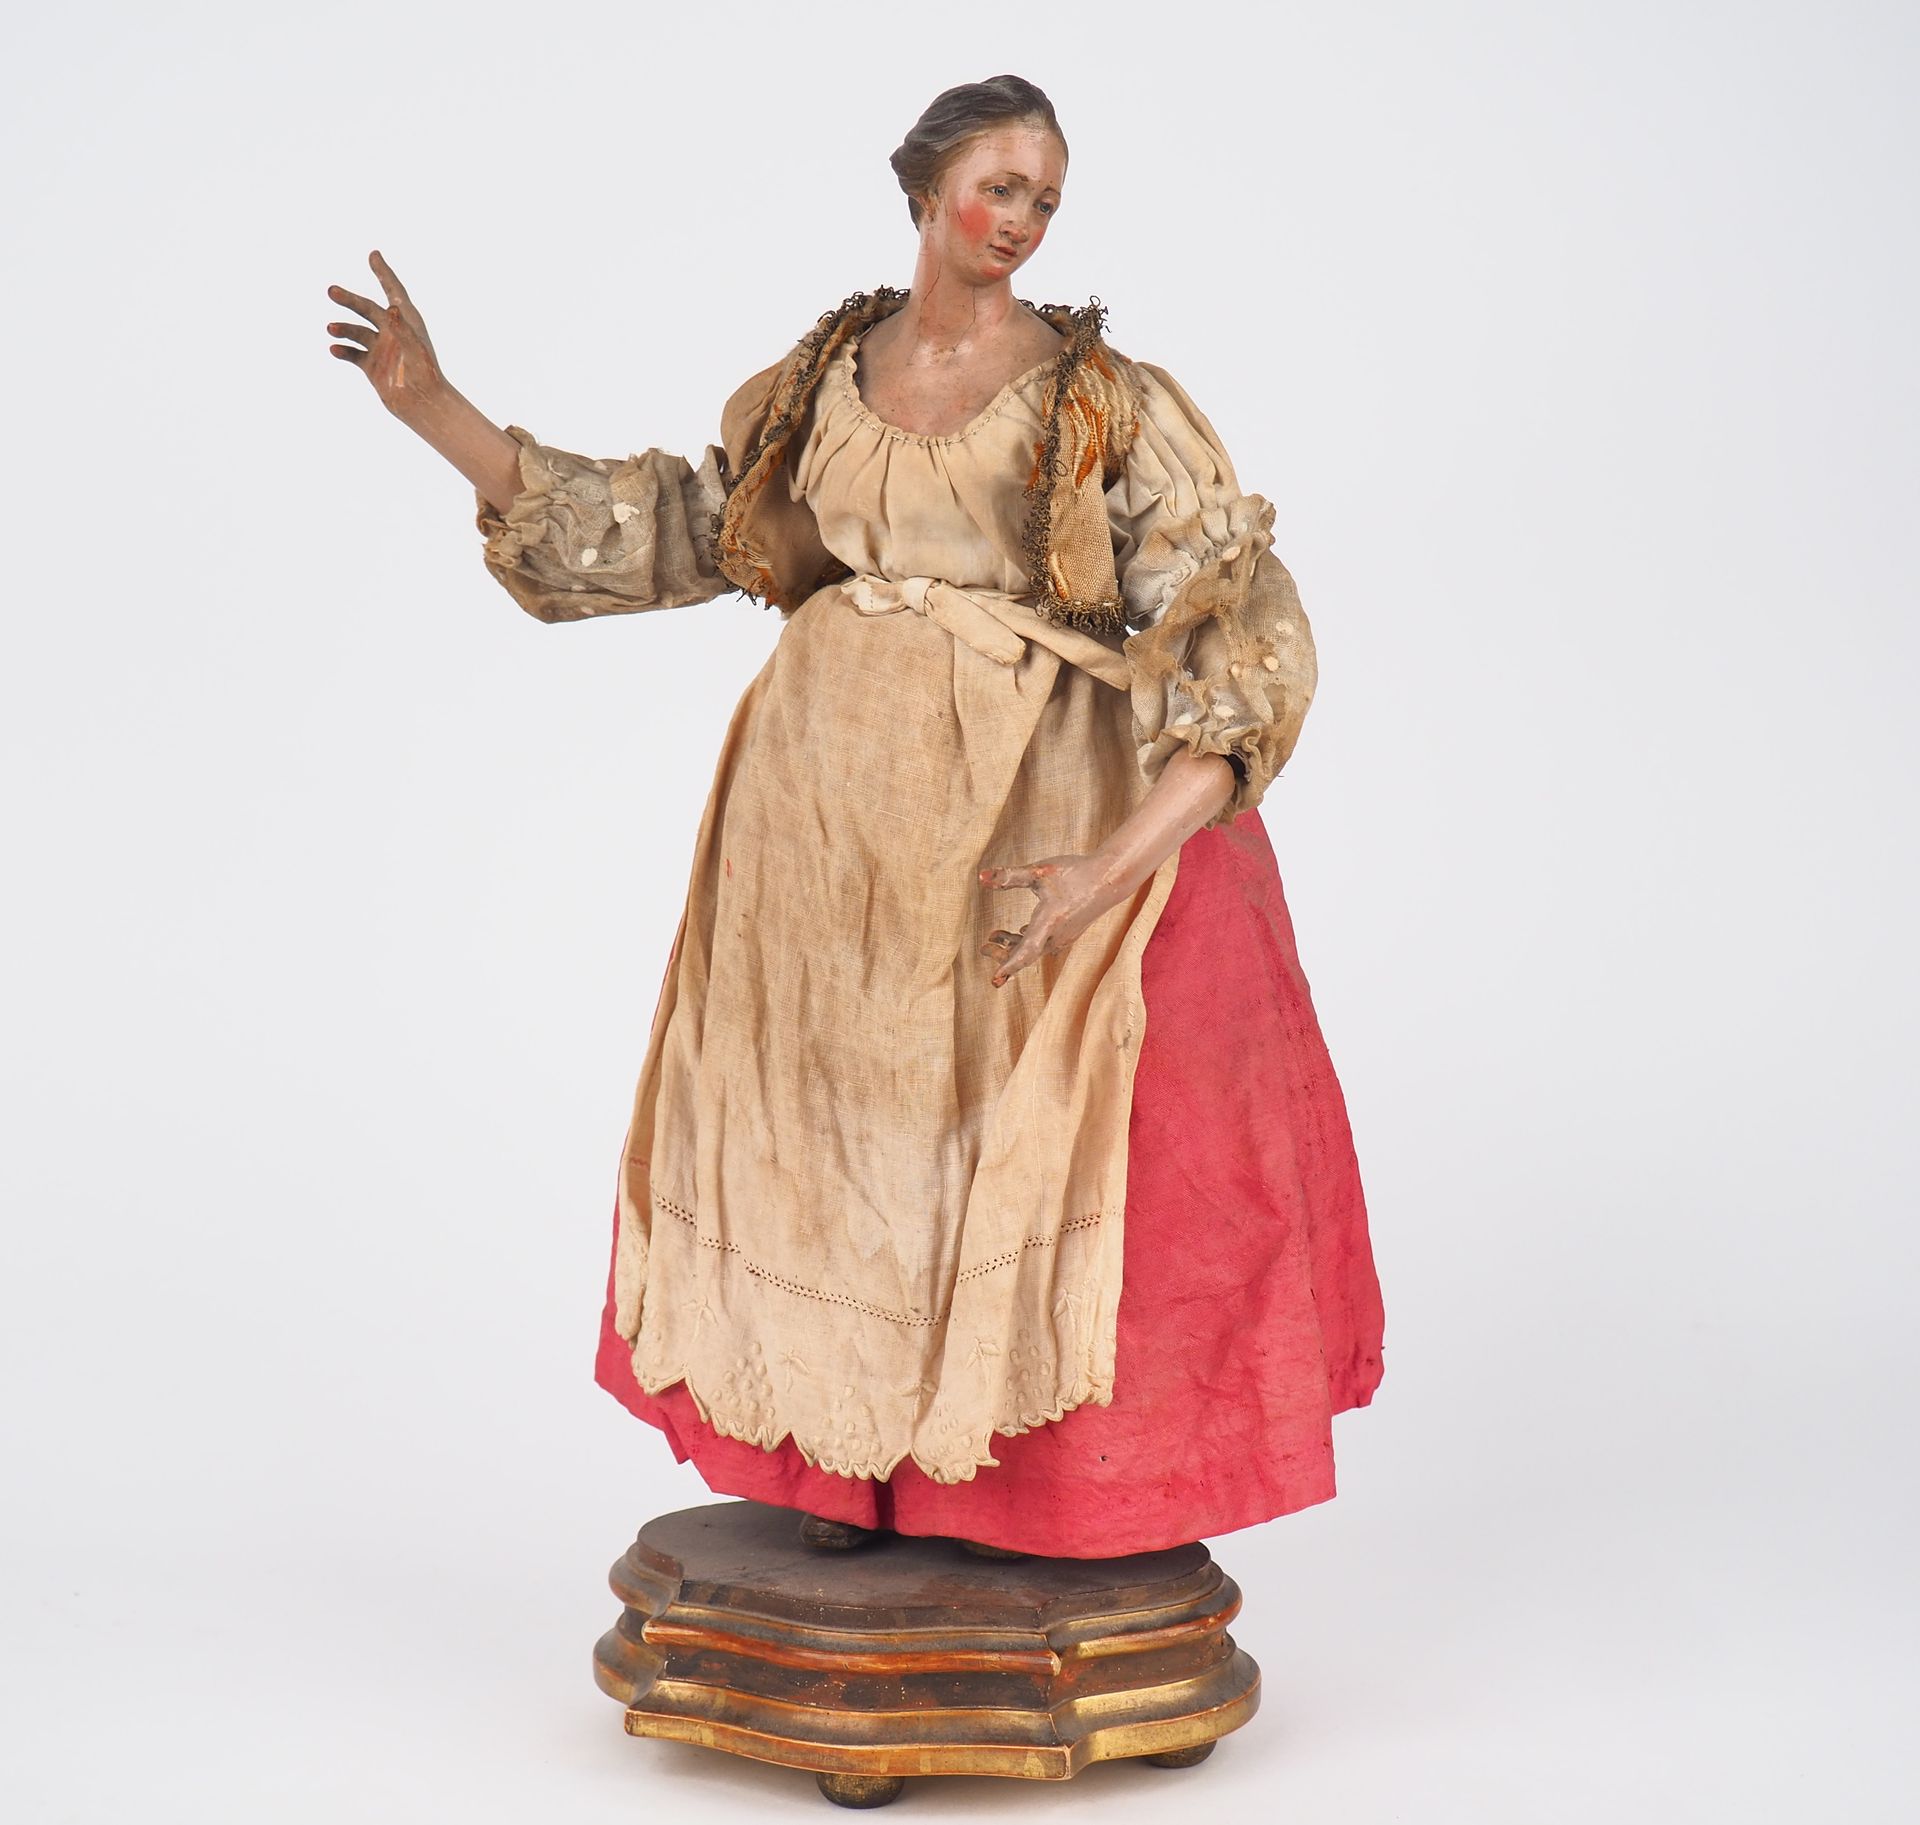 Null 那不勒斯的桑顿 "年轻的农家女孩"，多色木雕，有她原来的衣服。

H.36厘米。